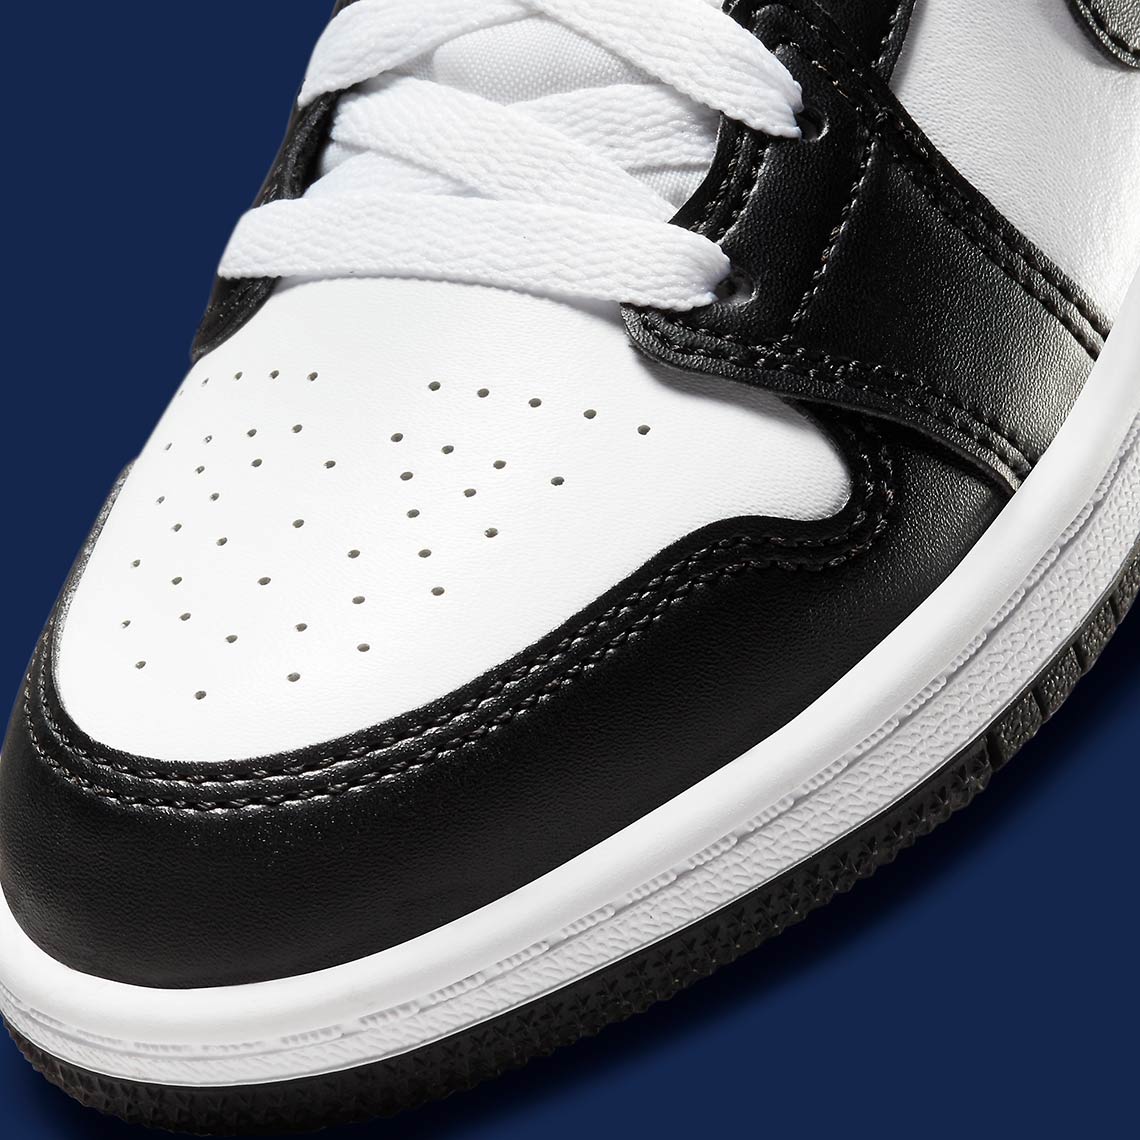 Air Jordan 1 Mid Heat Reactive Release Info | SneakerNews.com